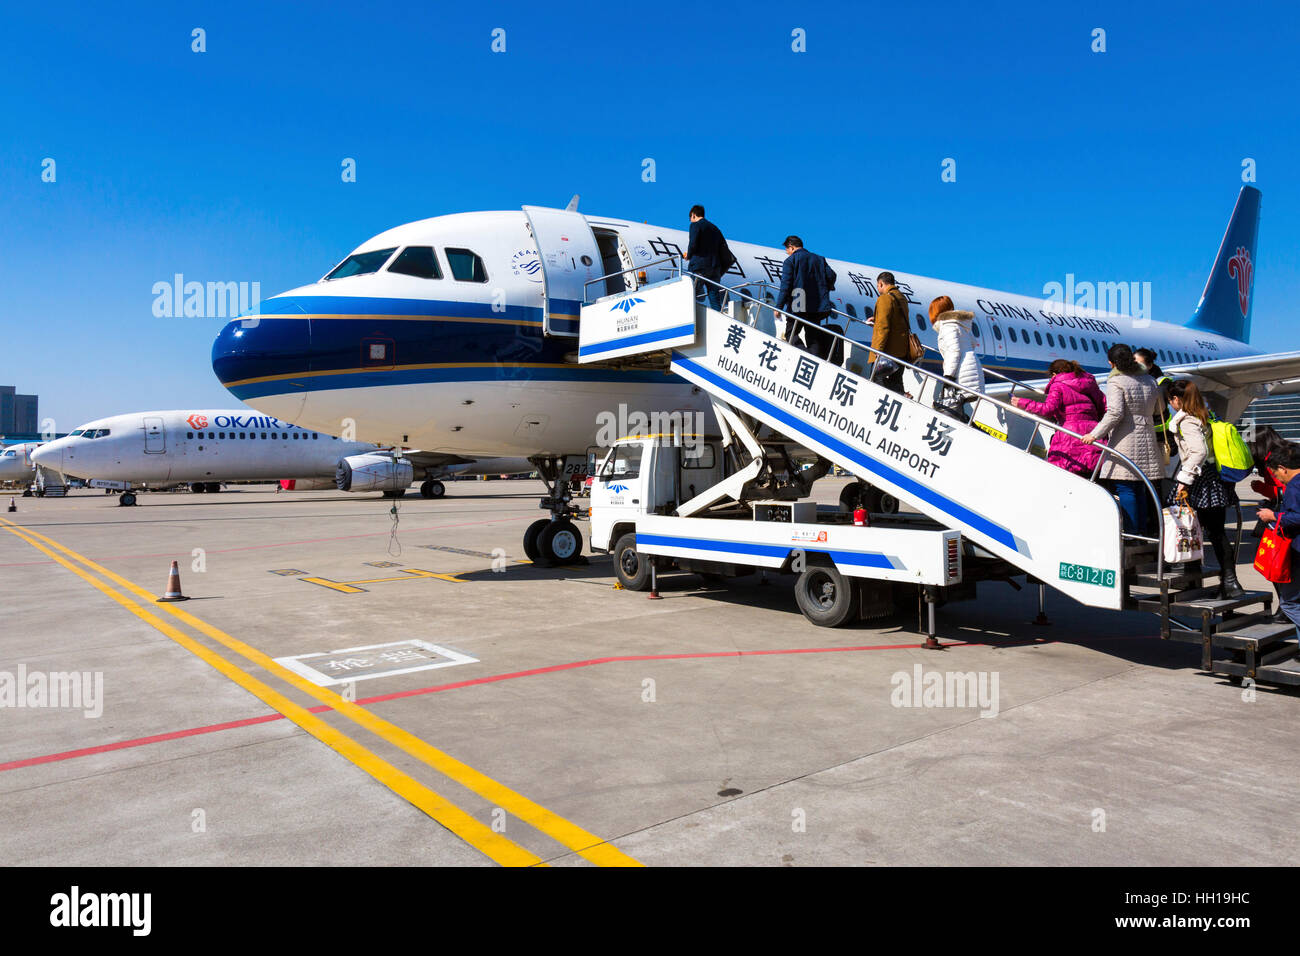 Passengers boarding plane at Changsha Huanghua International Airport, Hunan province, China Stock Photo